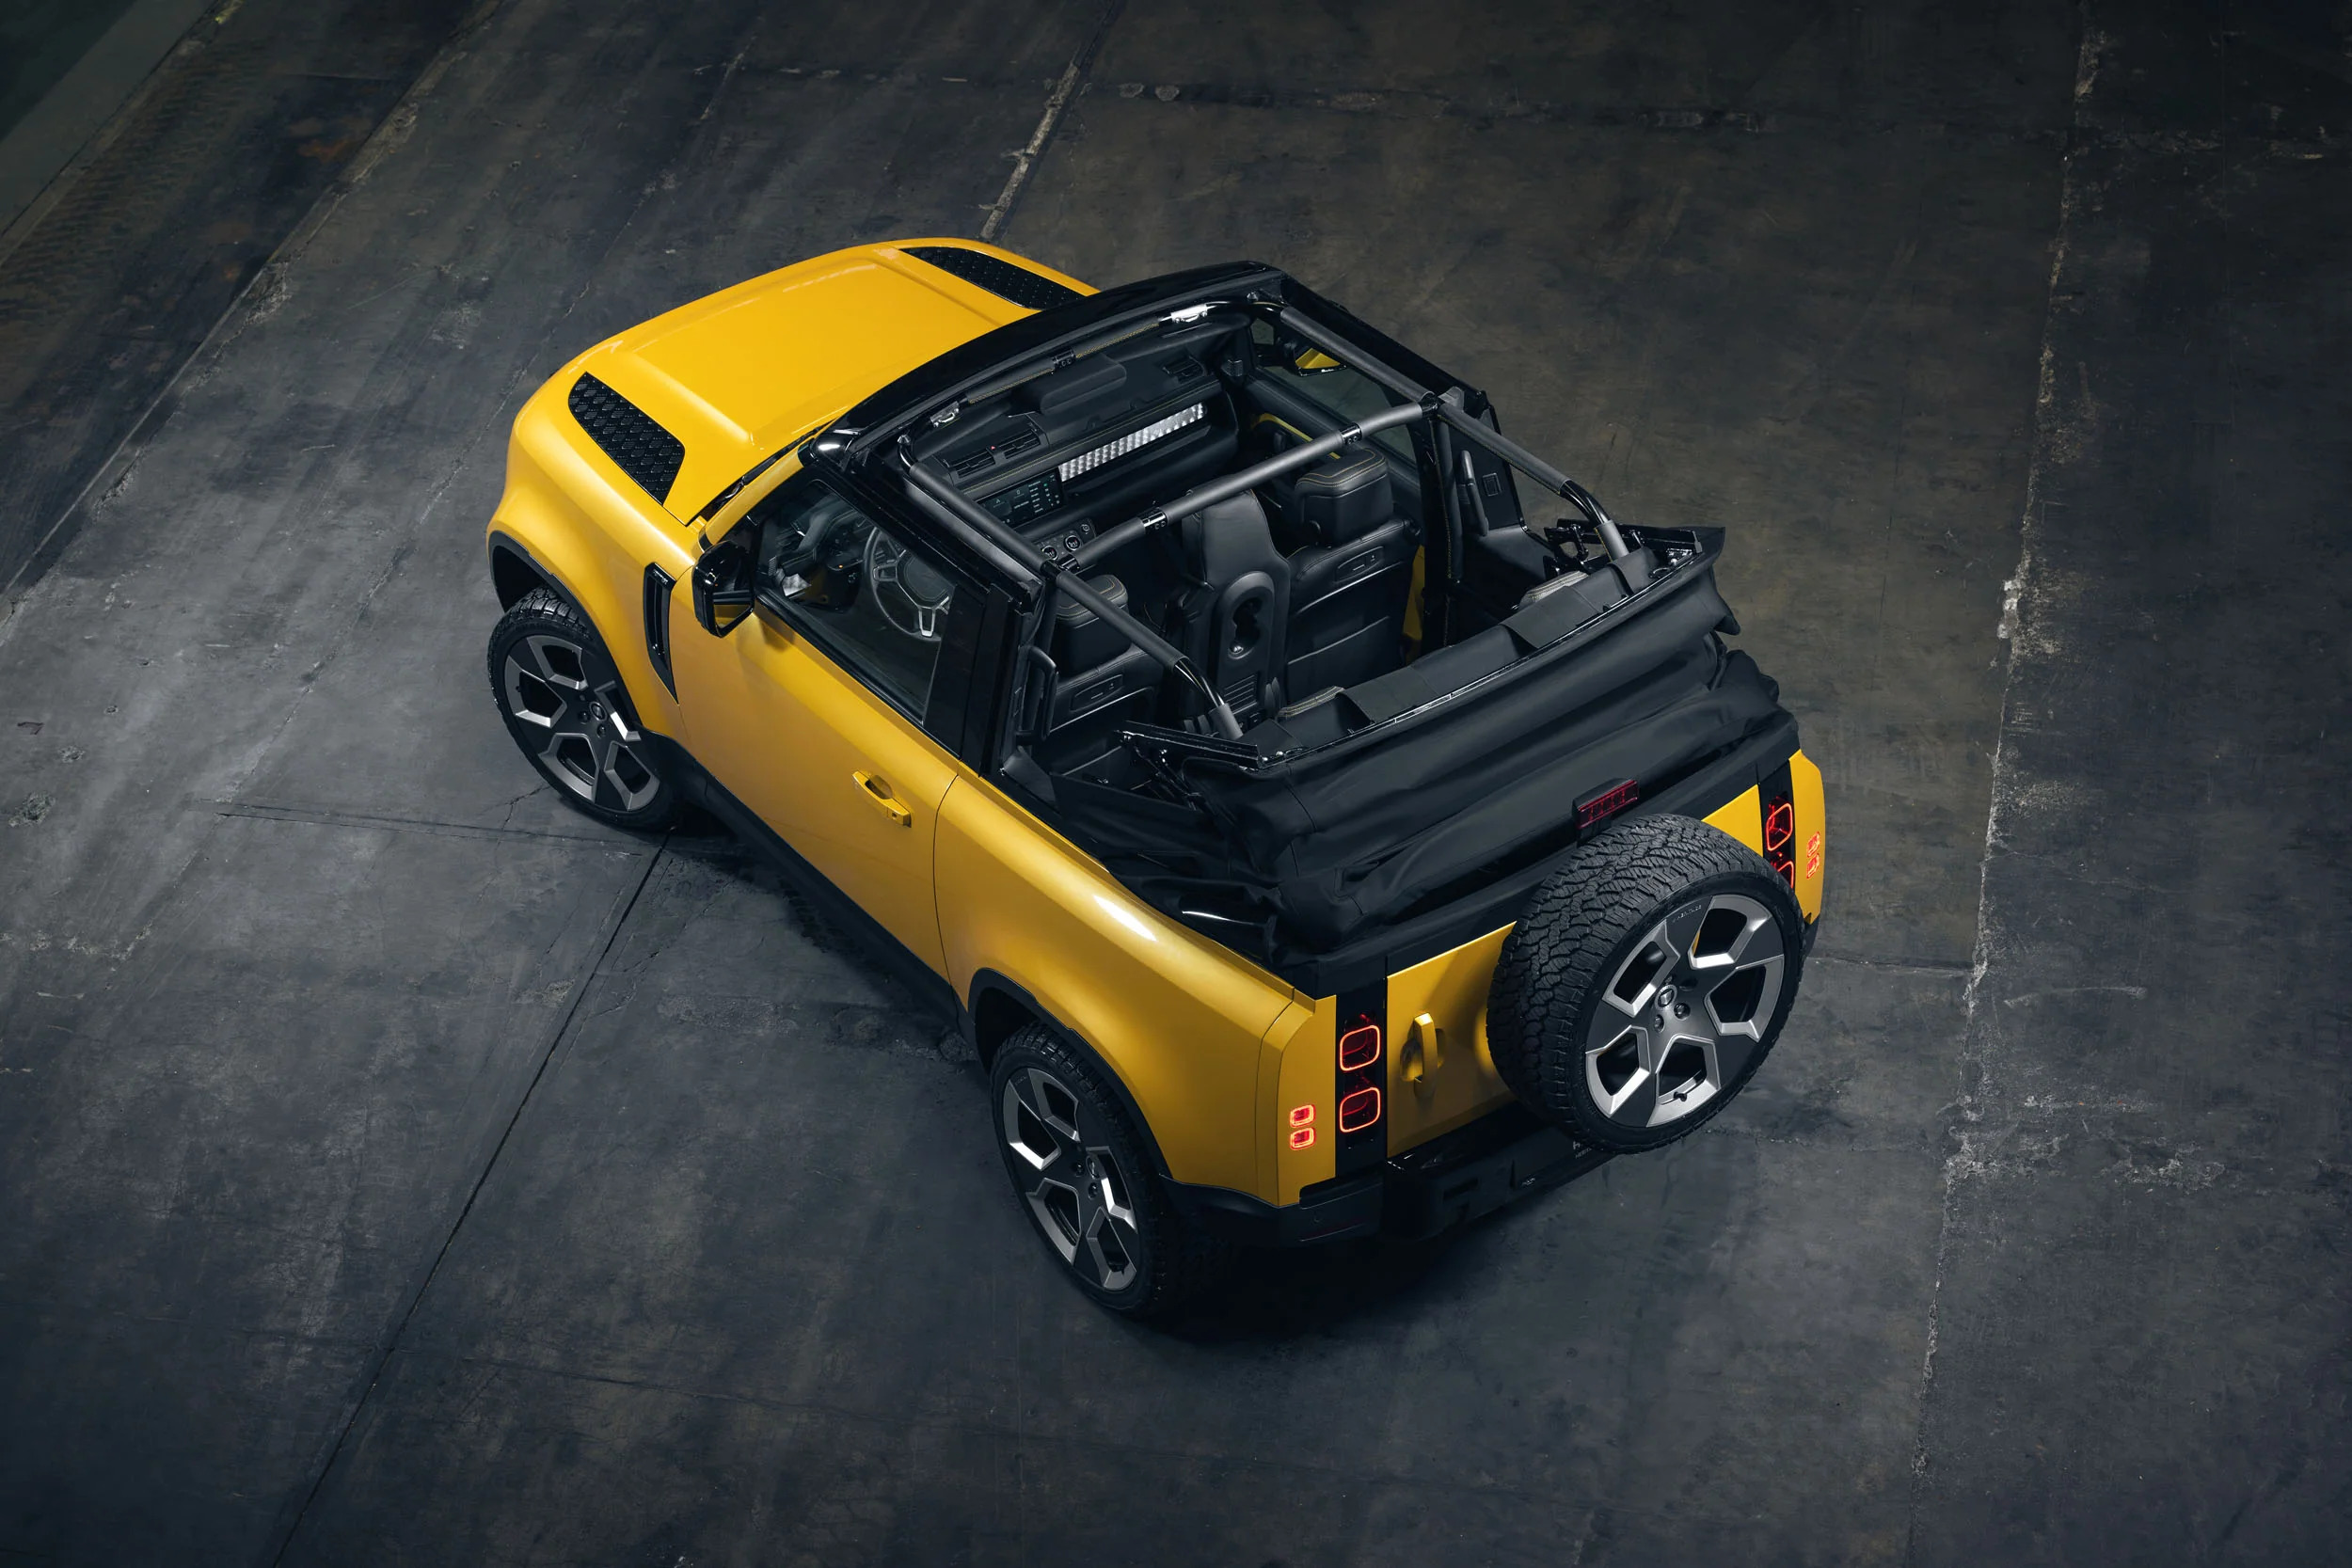 AnyConv.com Land Rover Defender Sunbeam Yellow Valiance Convertible